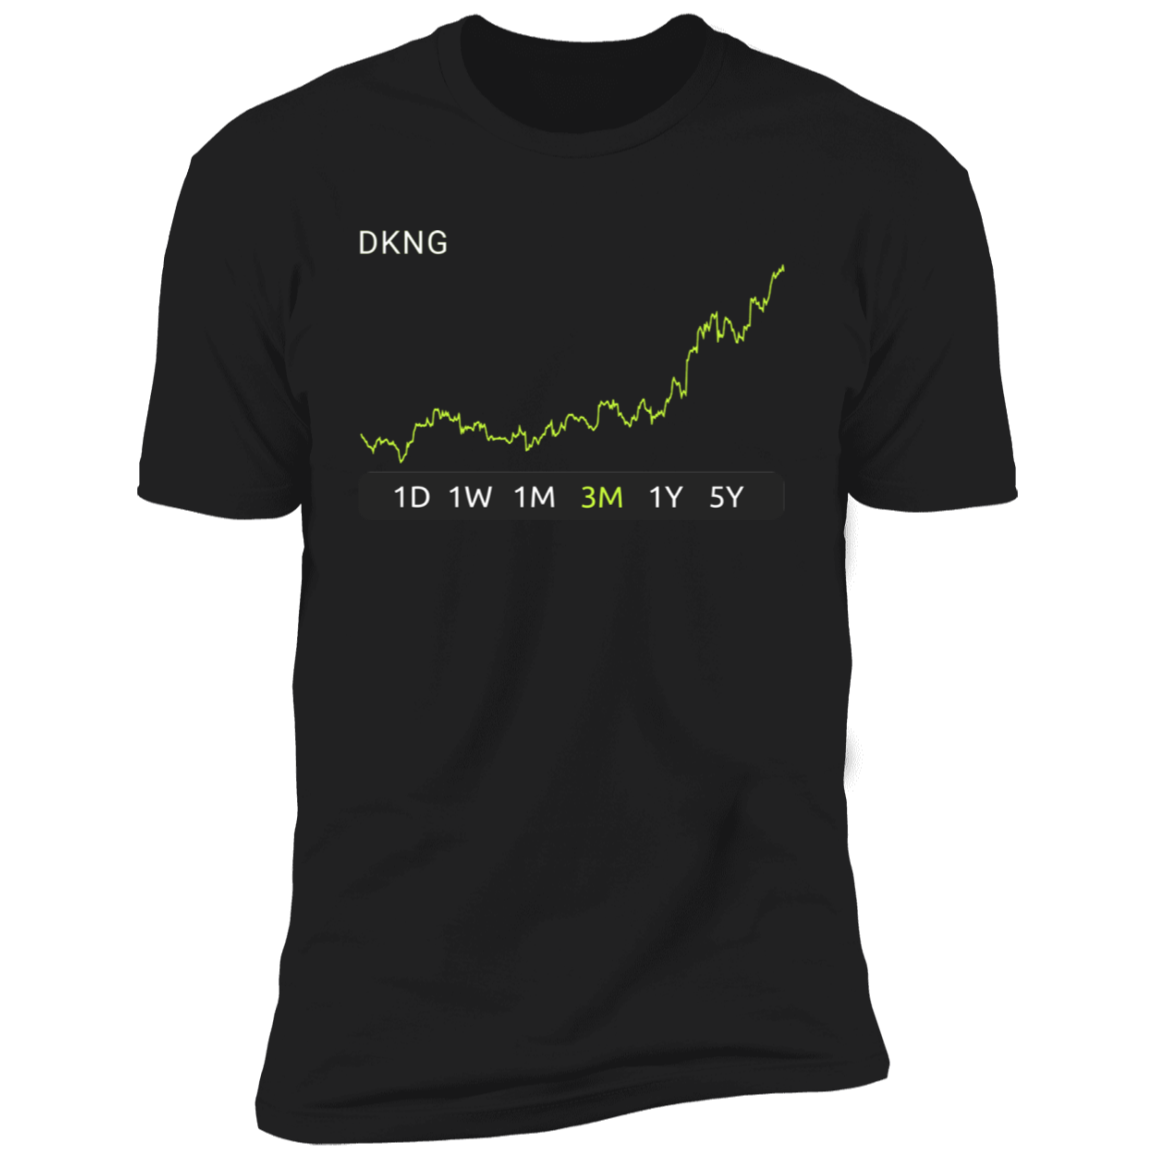 DKNG Stock 3m Premium T-Shirt